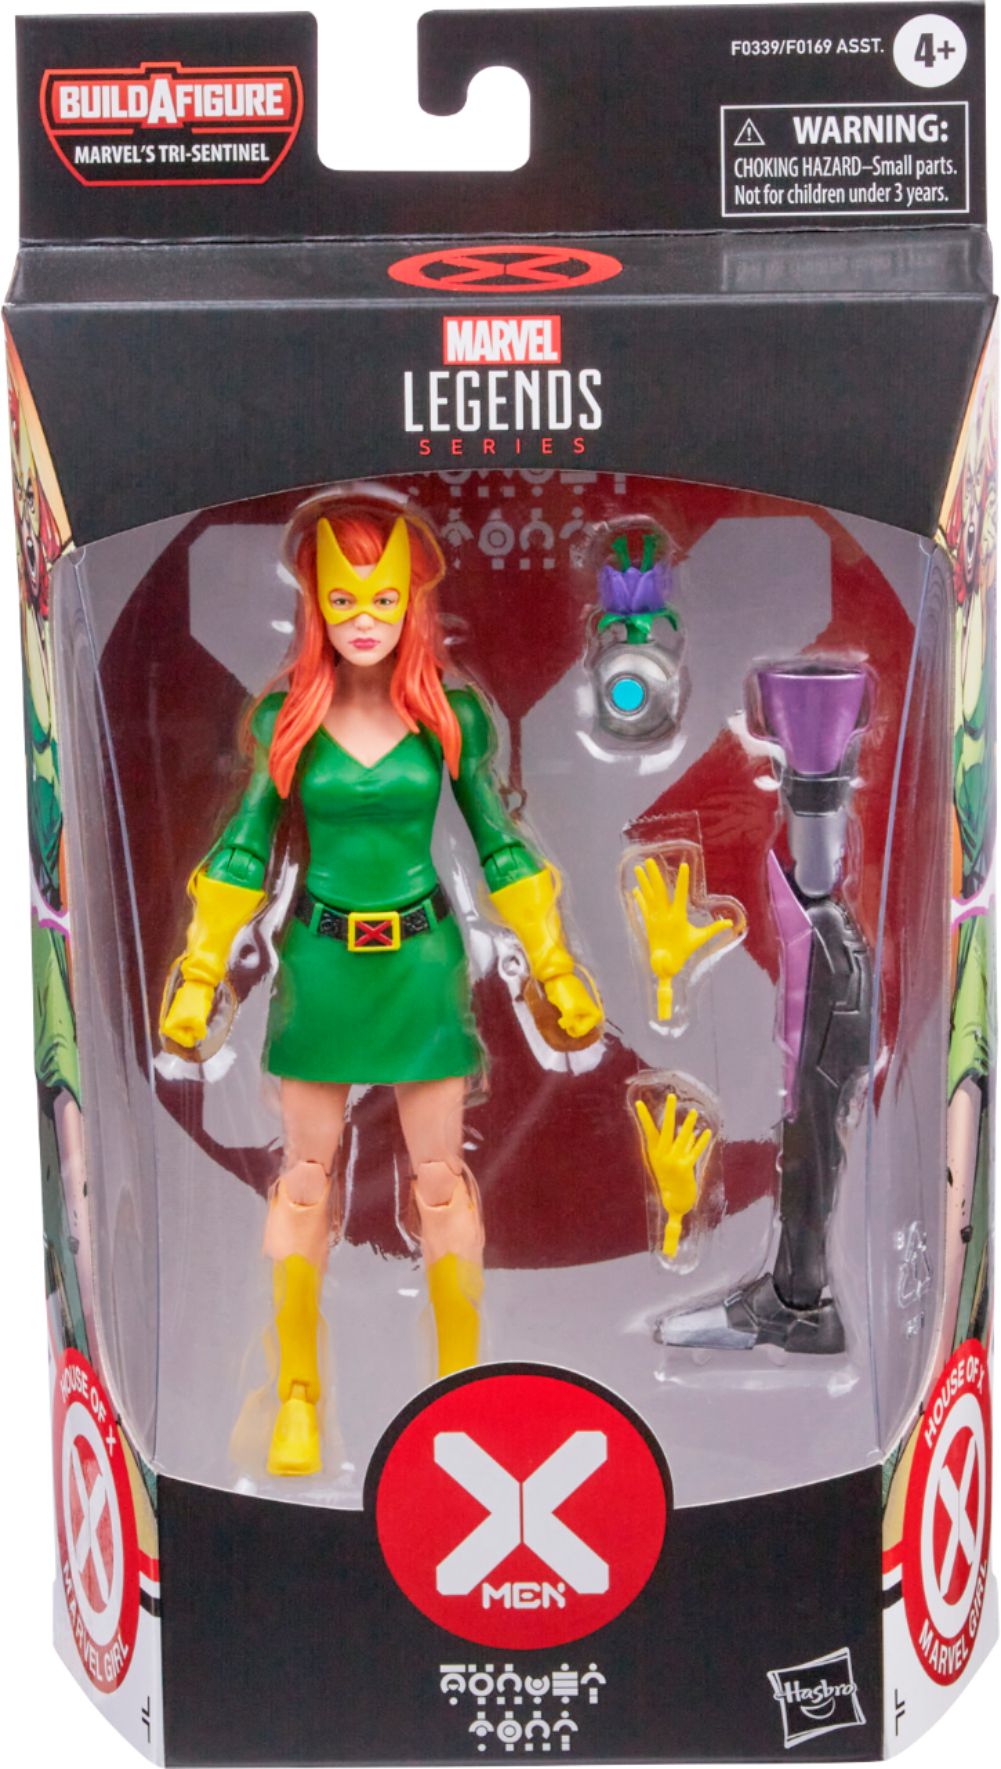 Hasbro Marvel Legends Series Jean Grey Action Figure F0339